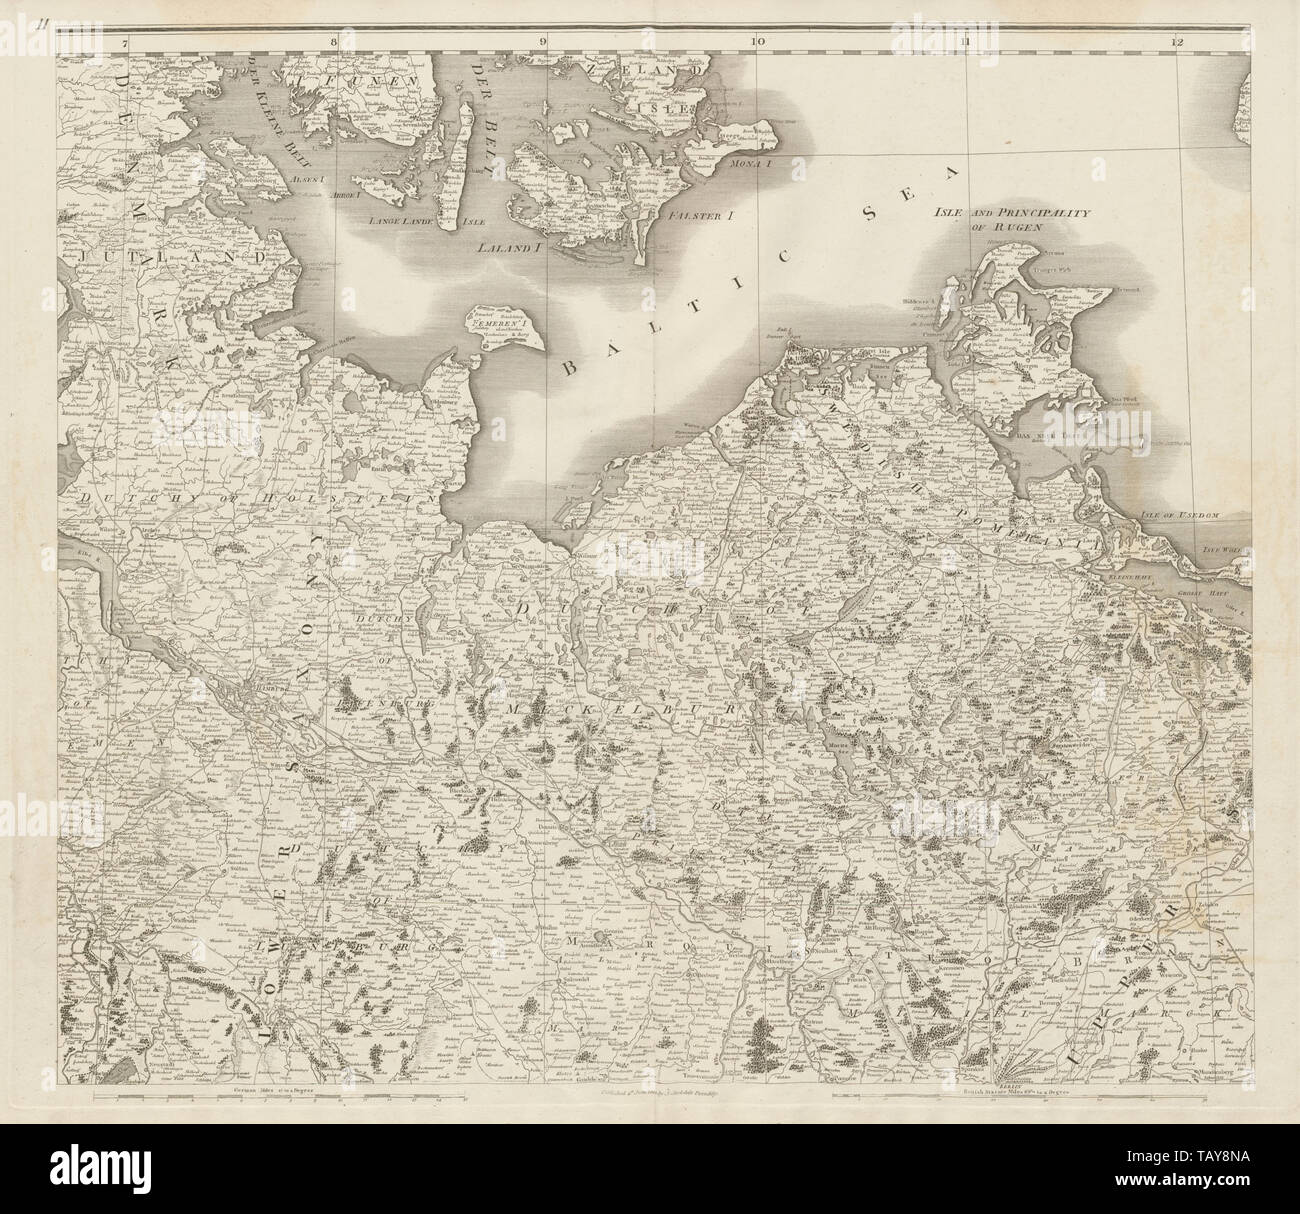 A nord-est della Germania. Schleswig-Holstein Mecklenburg-Pomerania. CHAUCHARD 1800 mappa Foto Stock